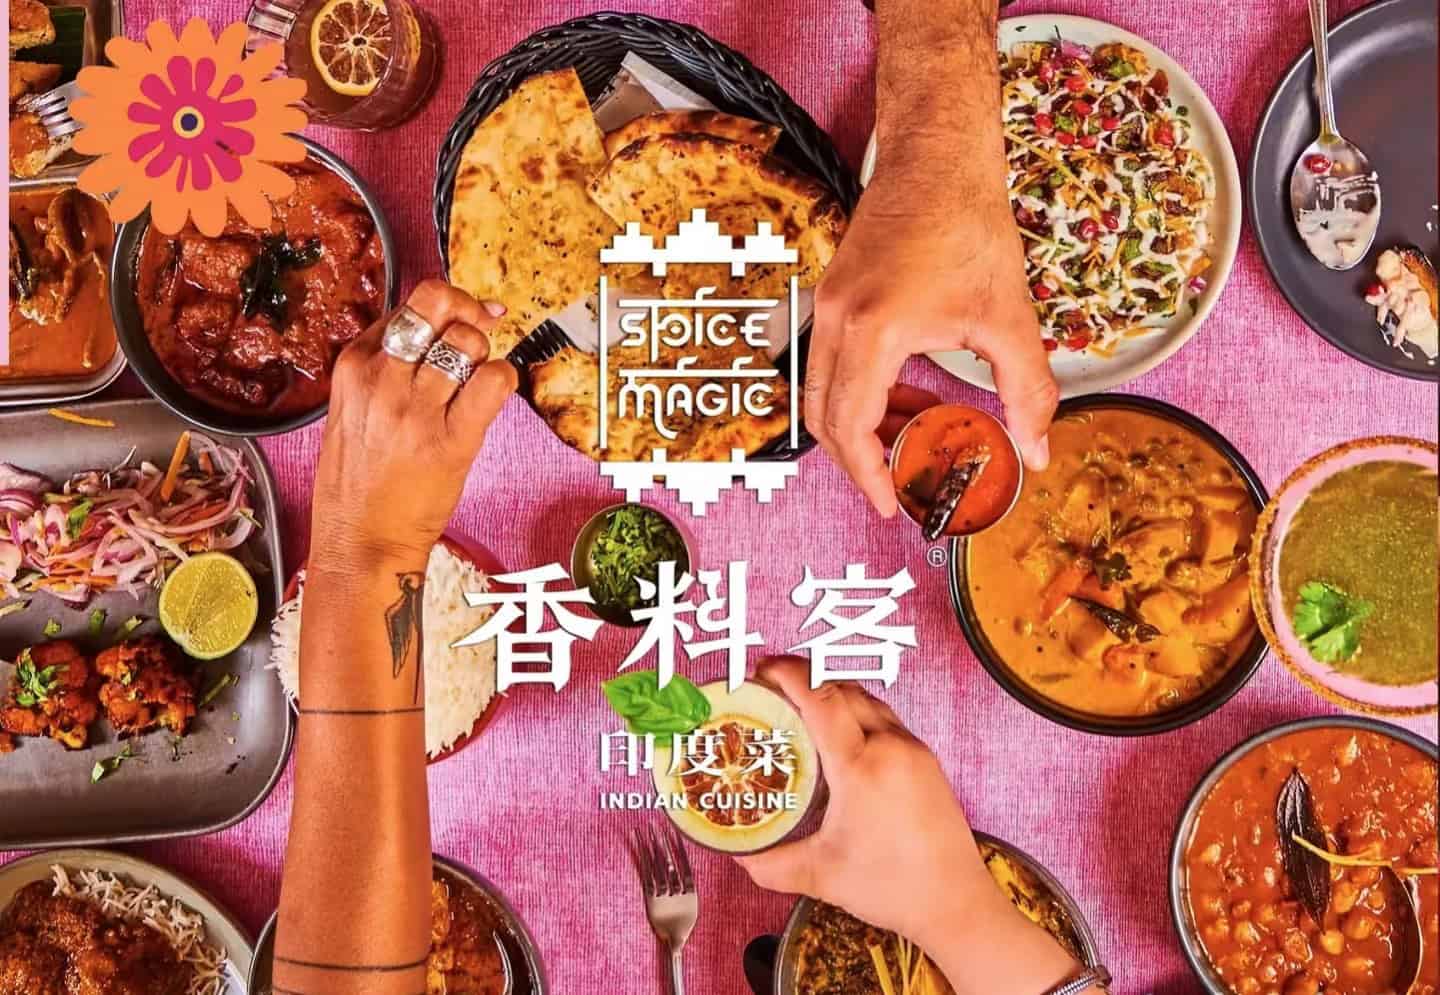 Spice Magic Indian Cuisine Capital Mall Branch